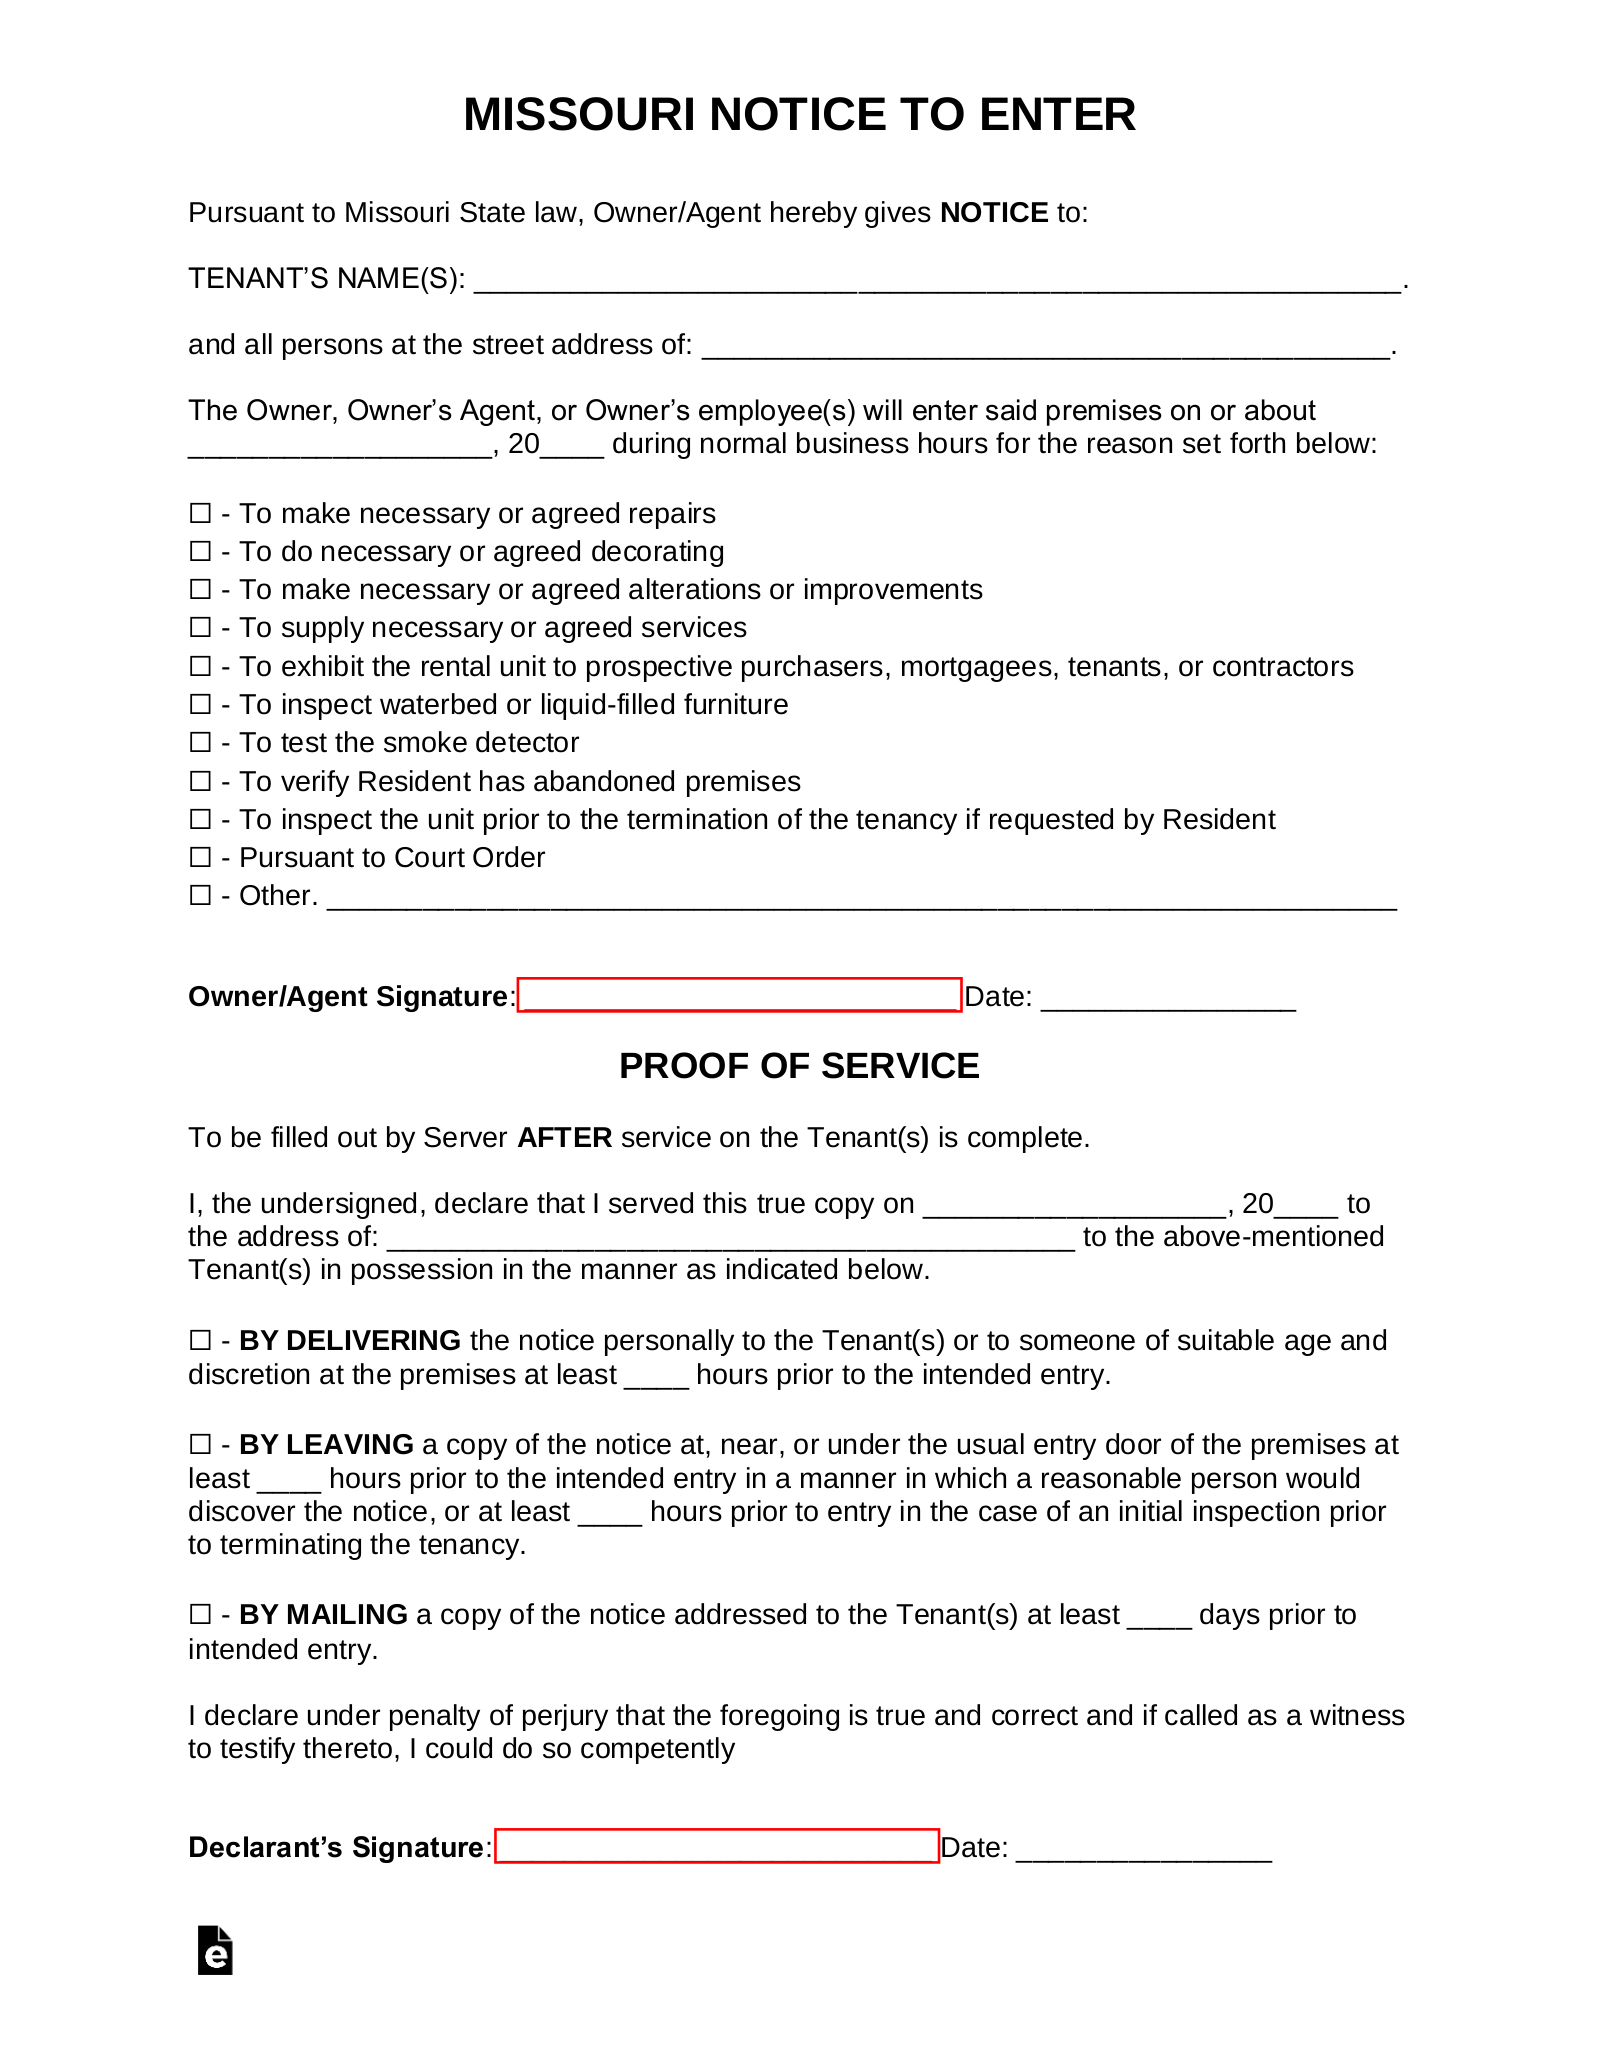 Missouri Landlord Notice to Enter Form